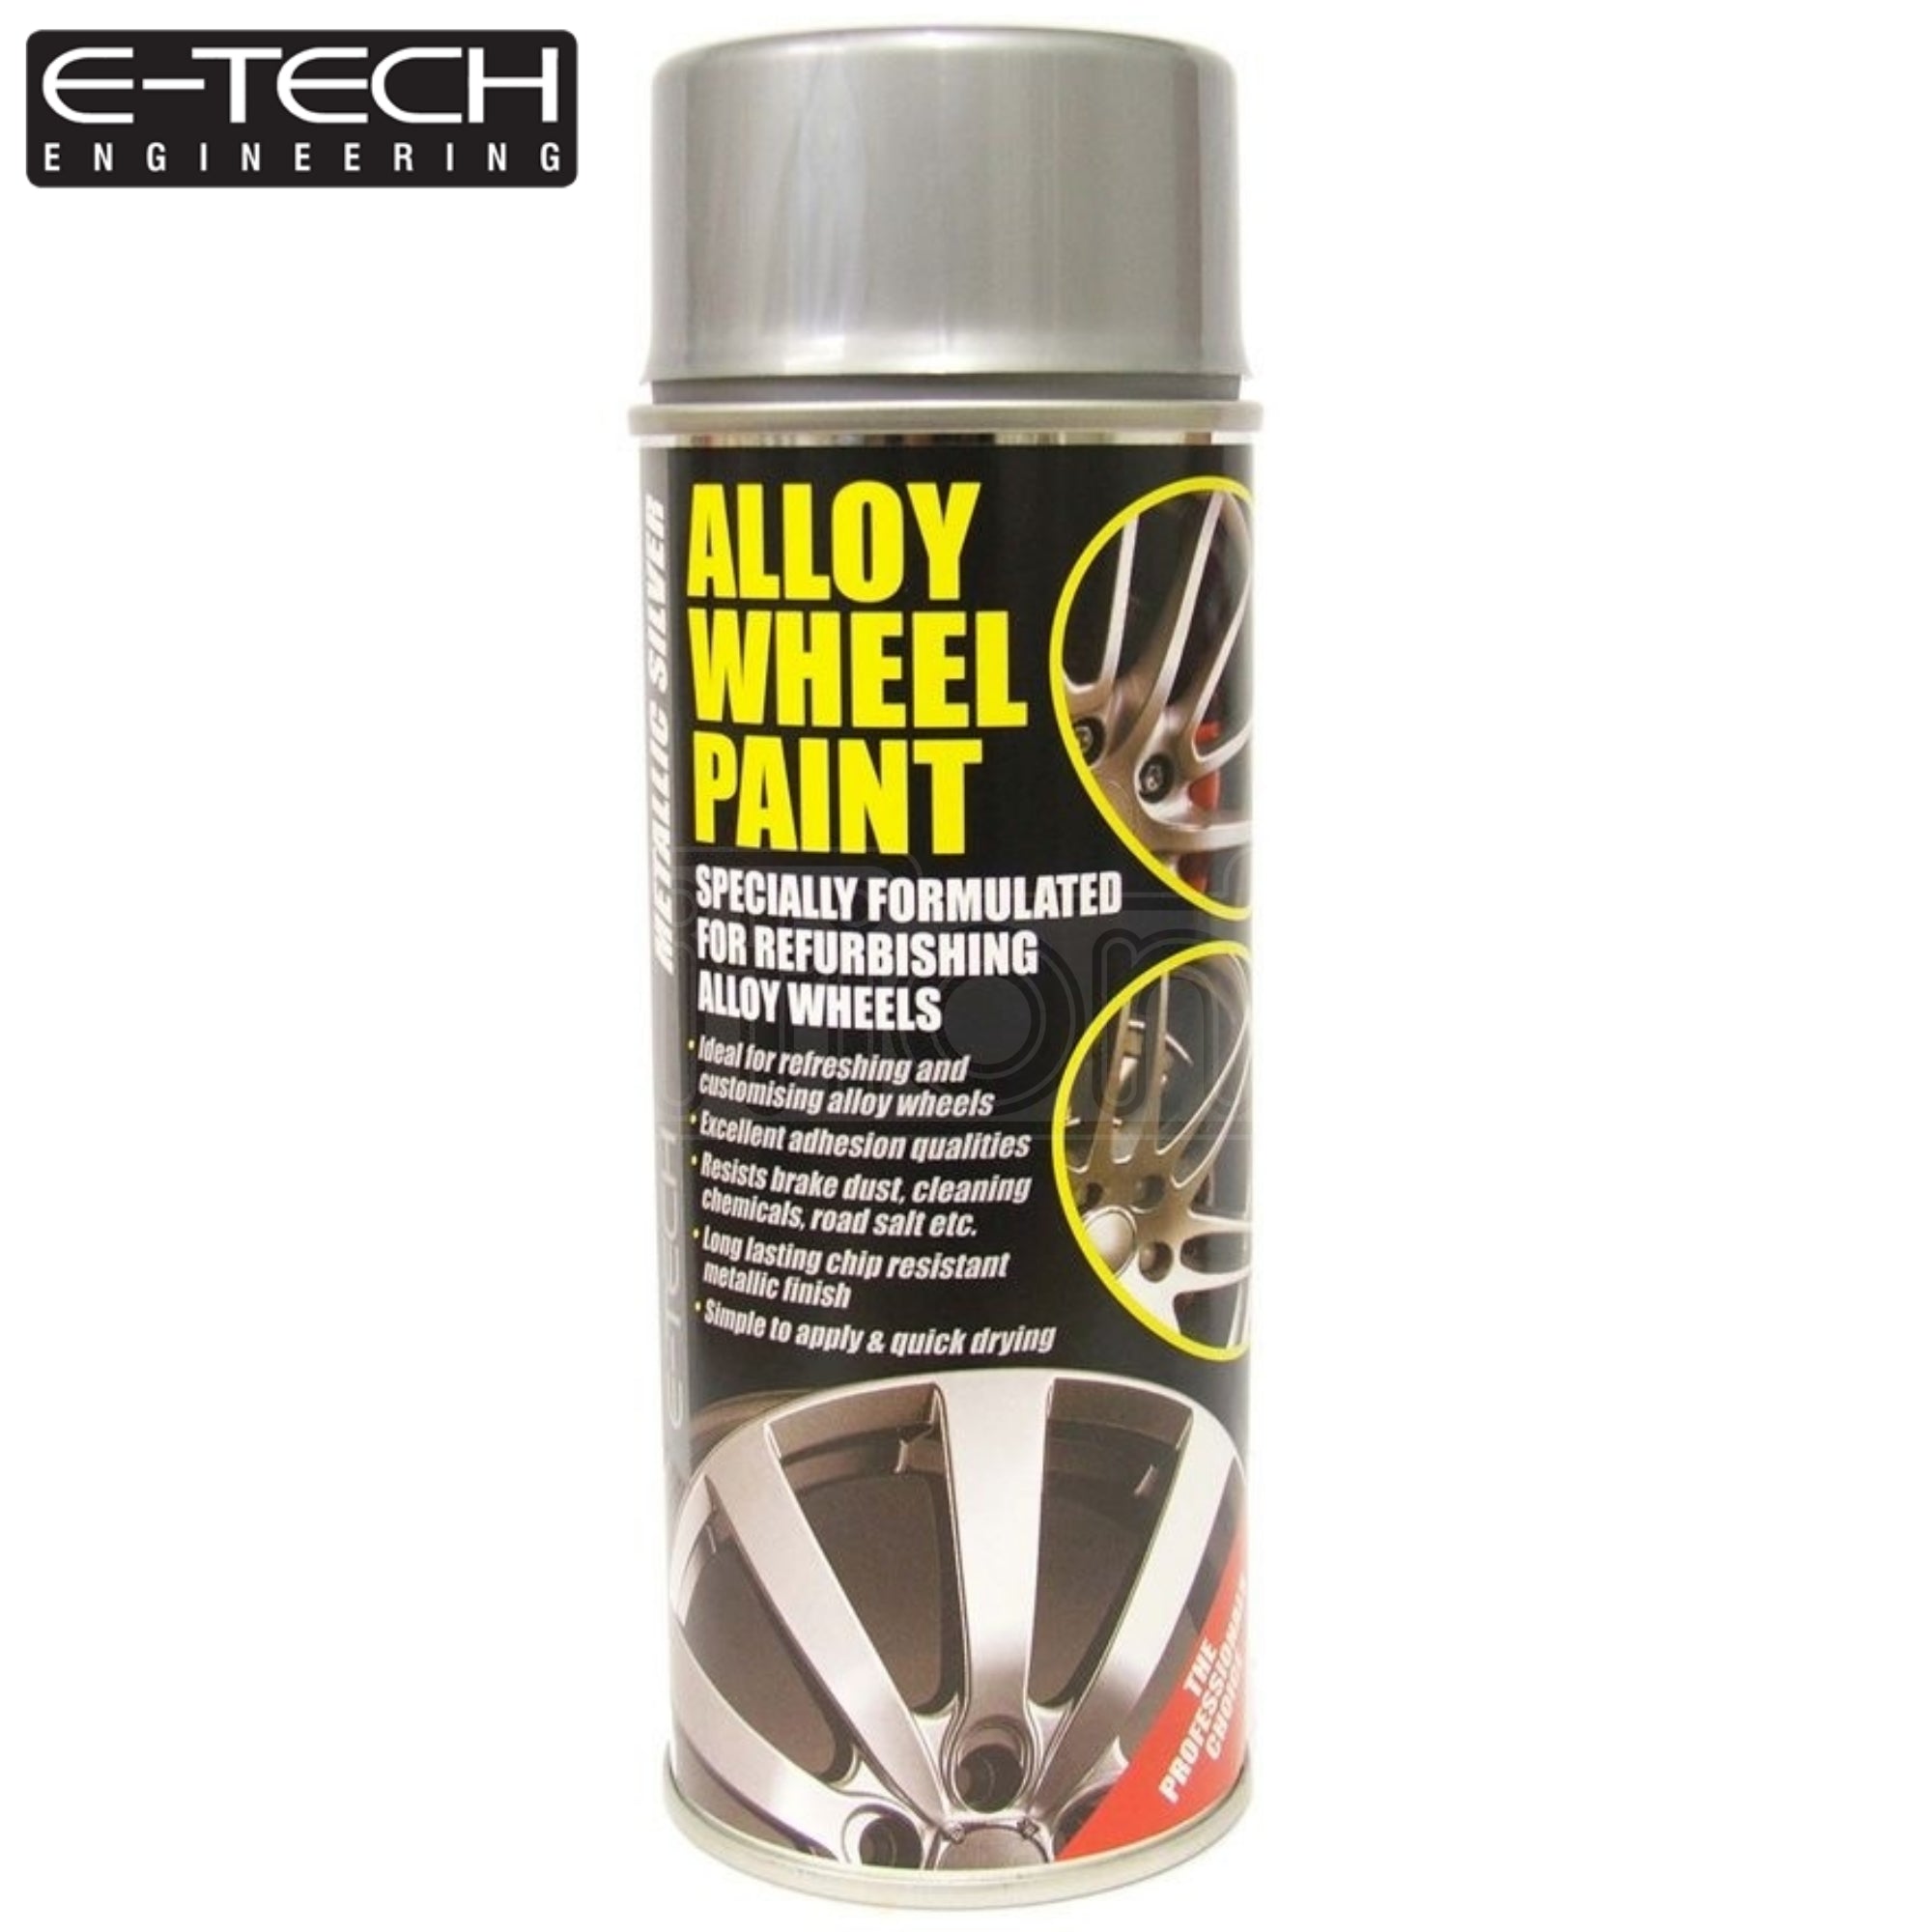 E-TECH Alloy Wheel Paint 400ml - Metallic Silver